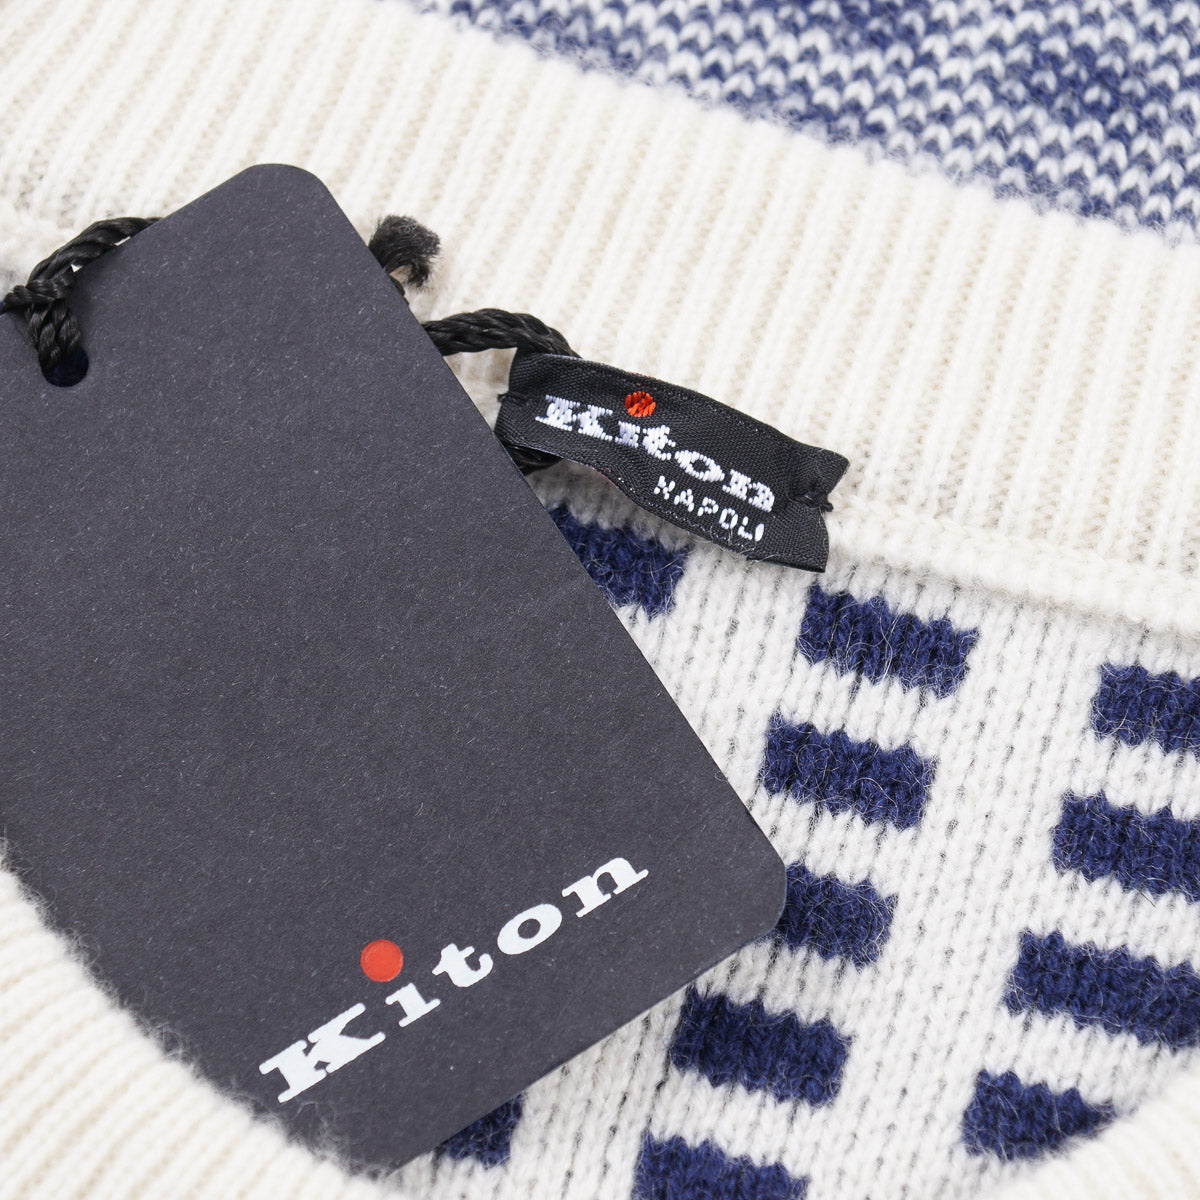 Kiton Plush Knit Cashmere Sweater - Top Shelf Apparel